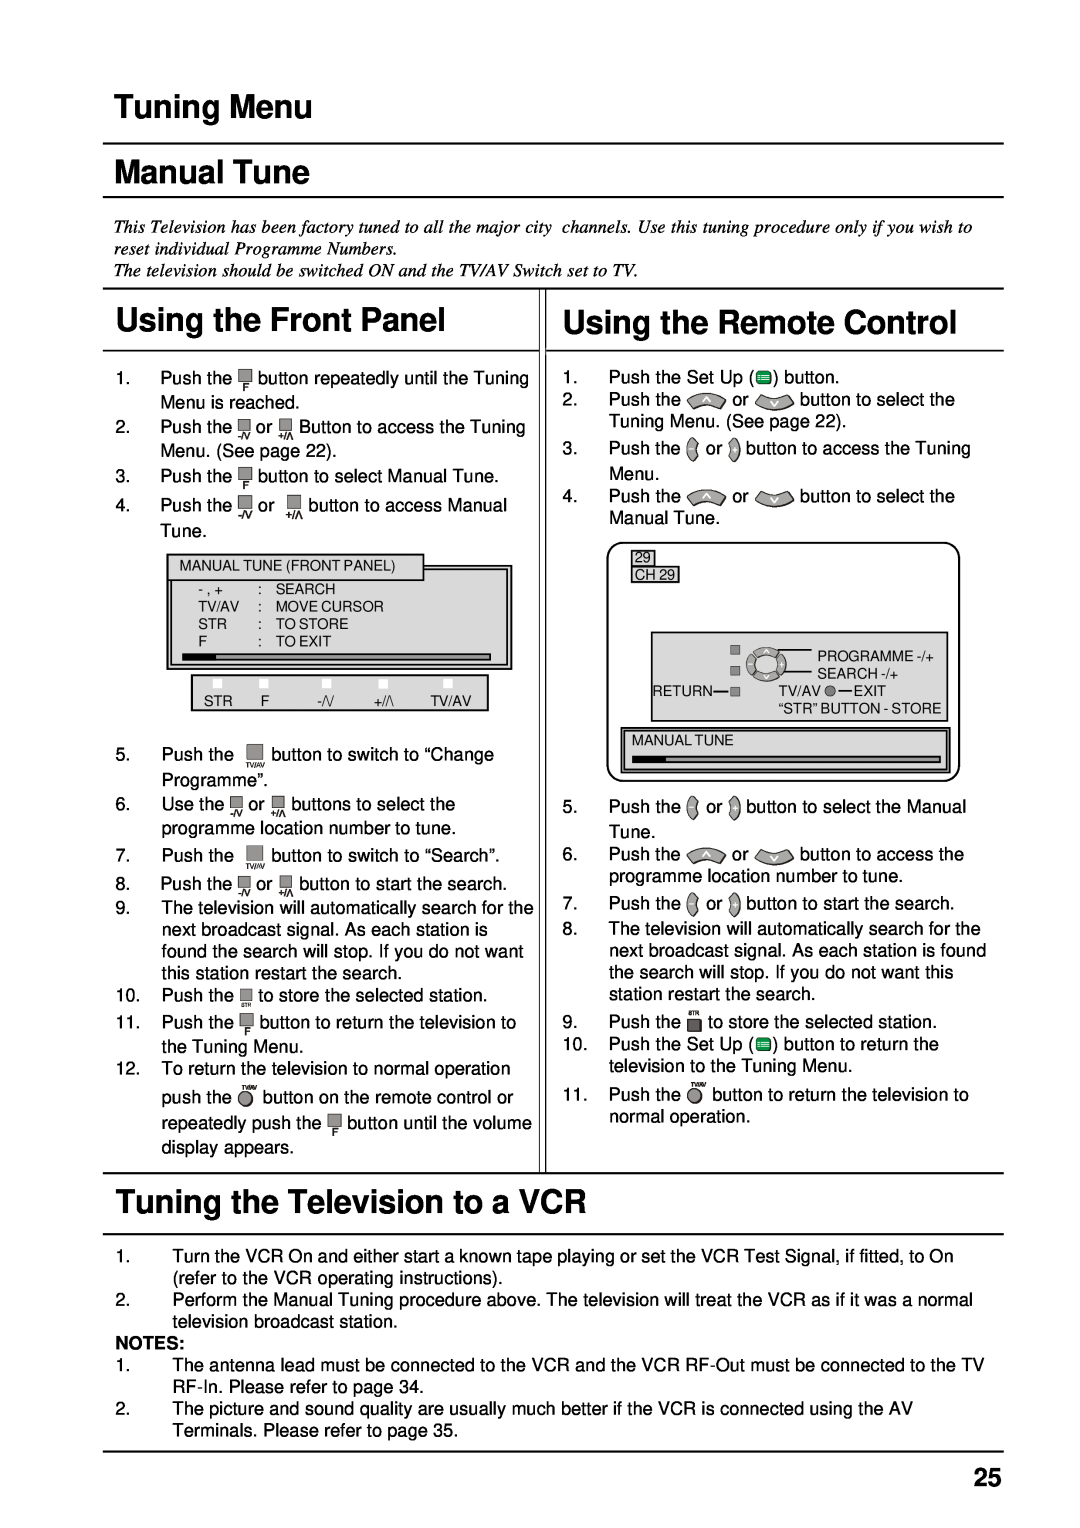 Panasonic TX-68P200A manual Tuning Menu Manual Tune, Tuning the Television to a VCR, Using the Front Panel 